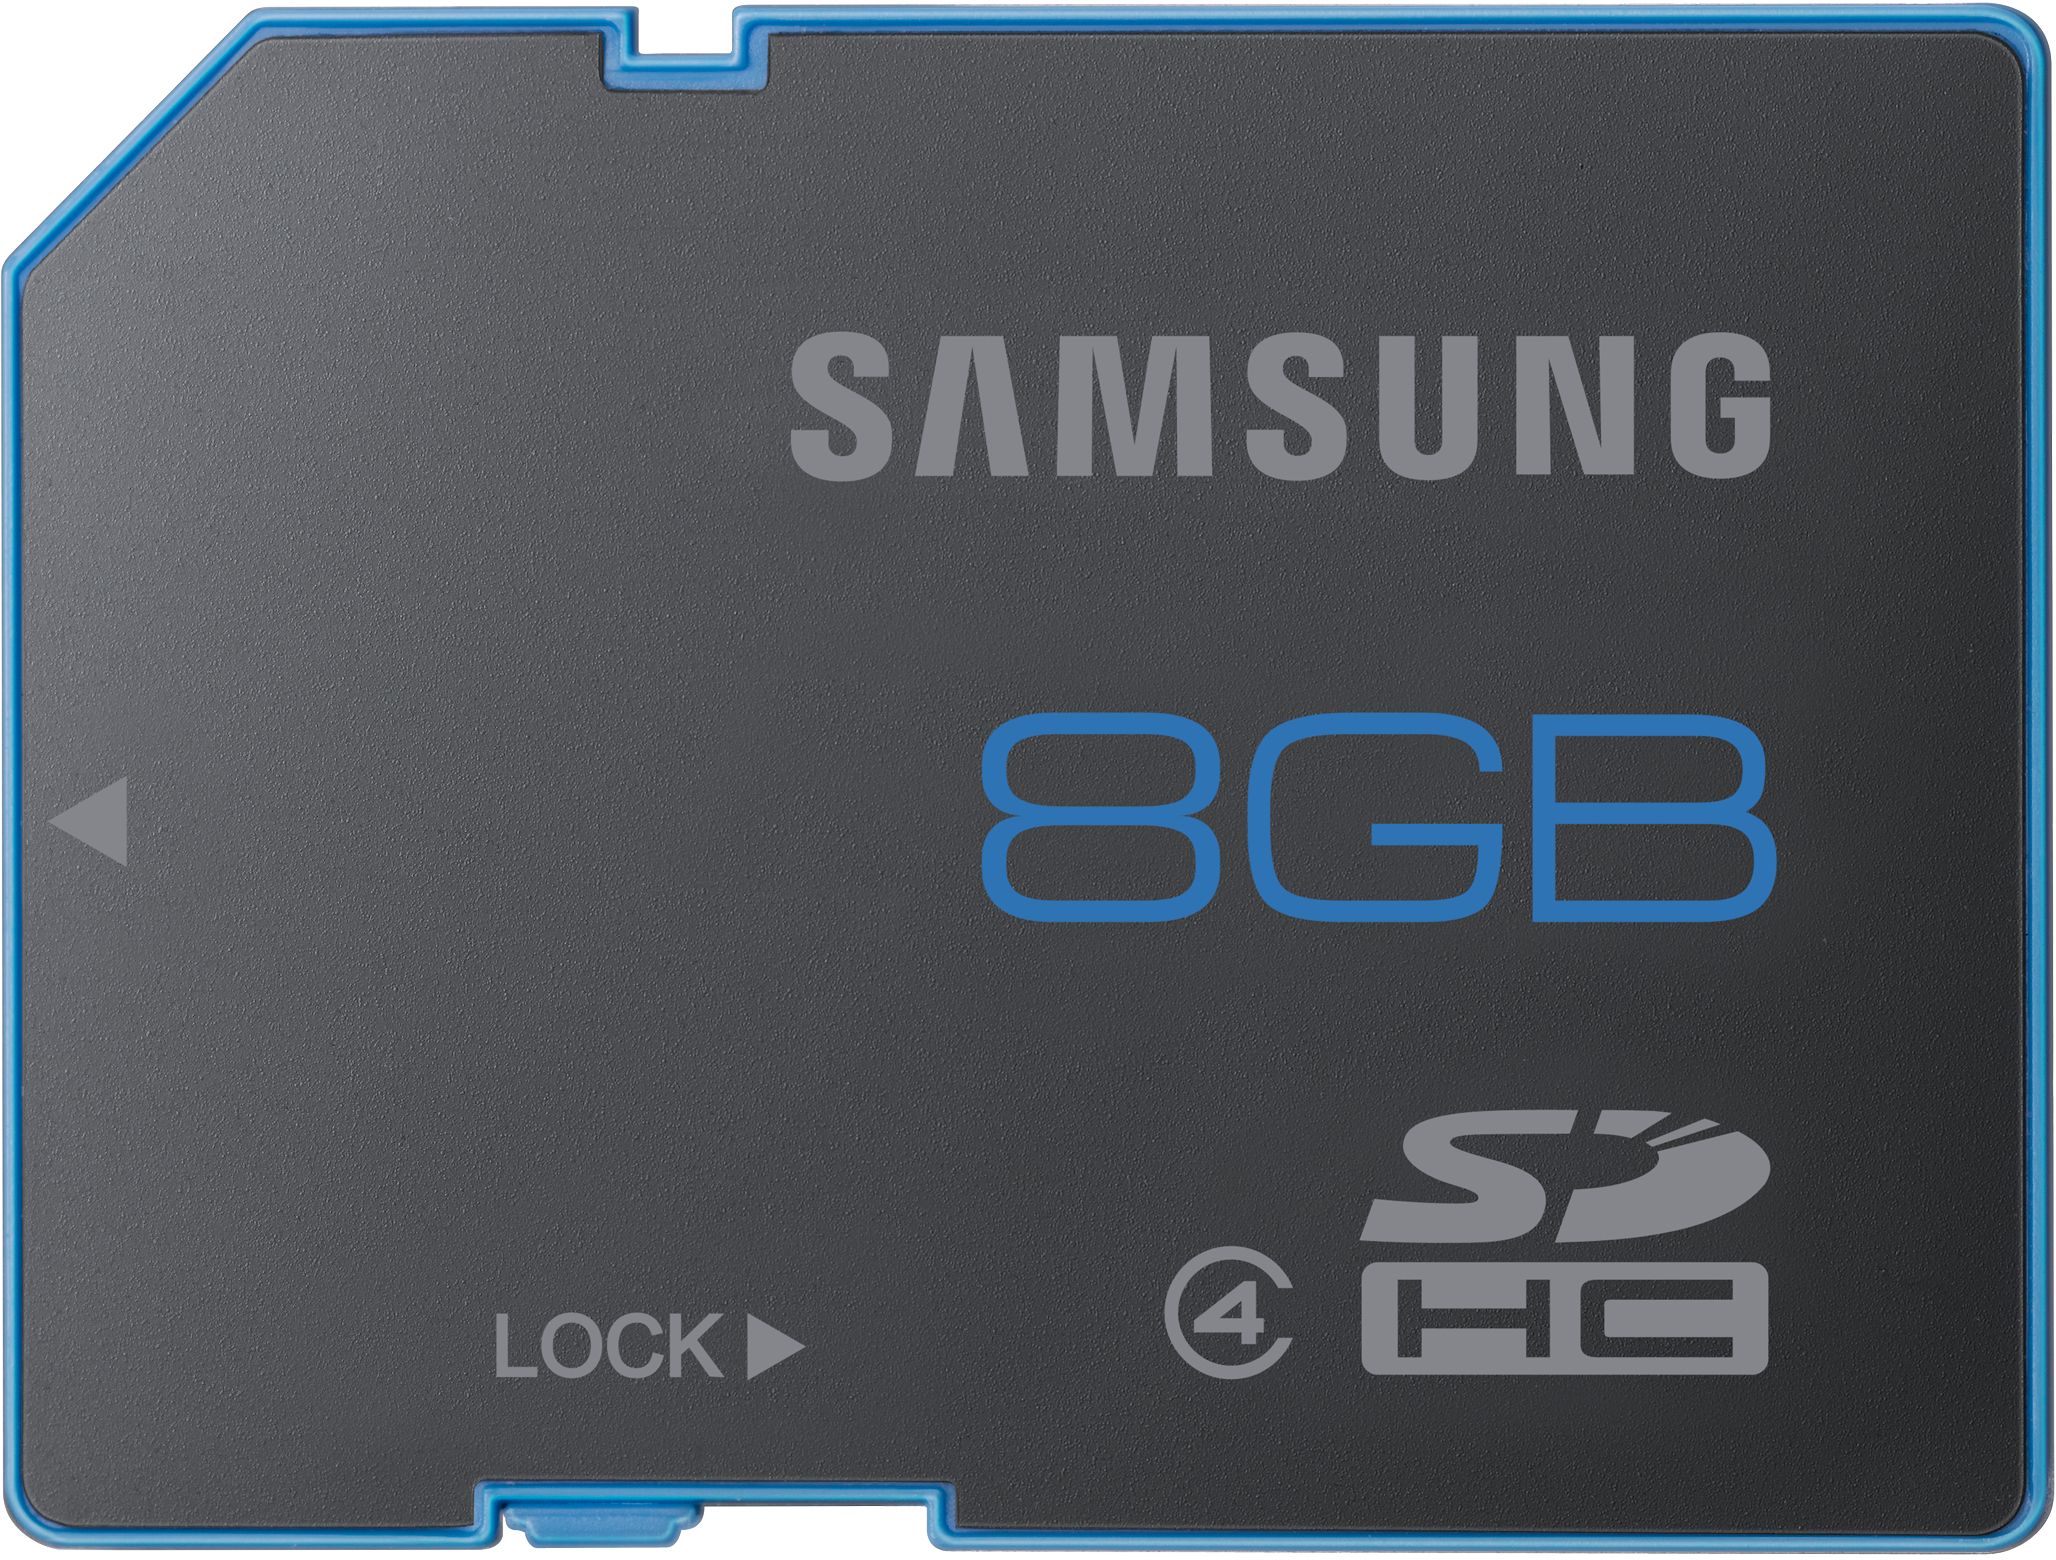 Samsung SDHC 24MB/s CLASS 4 - 8GB